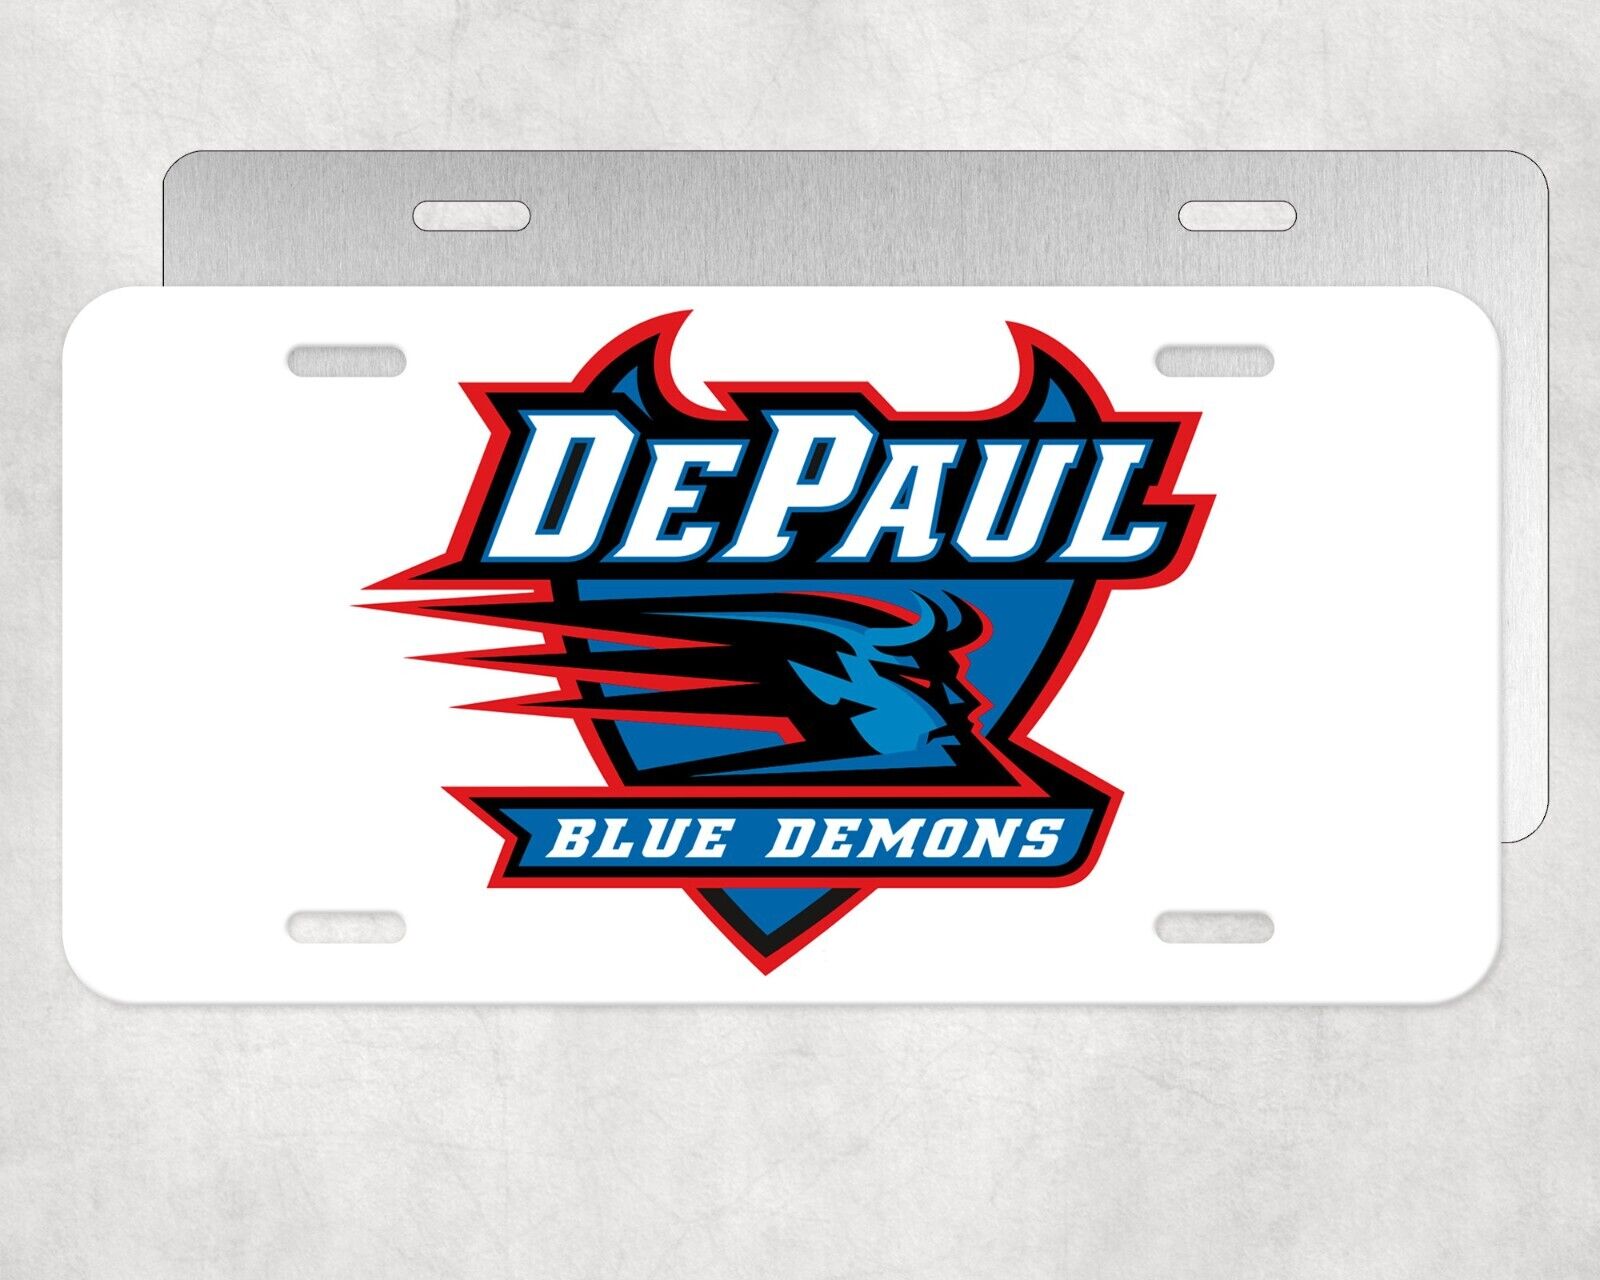 License Plate Tag Depaul University Blue Demons